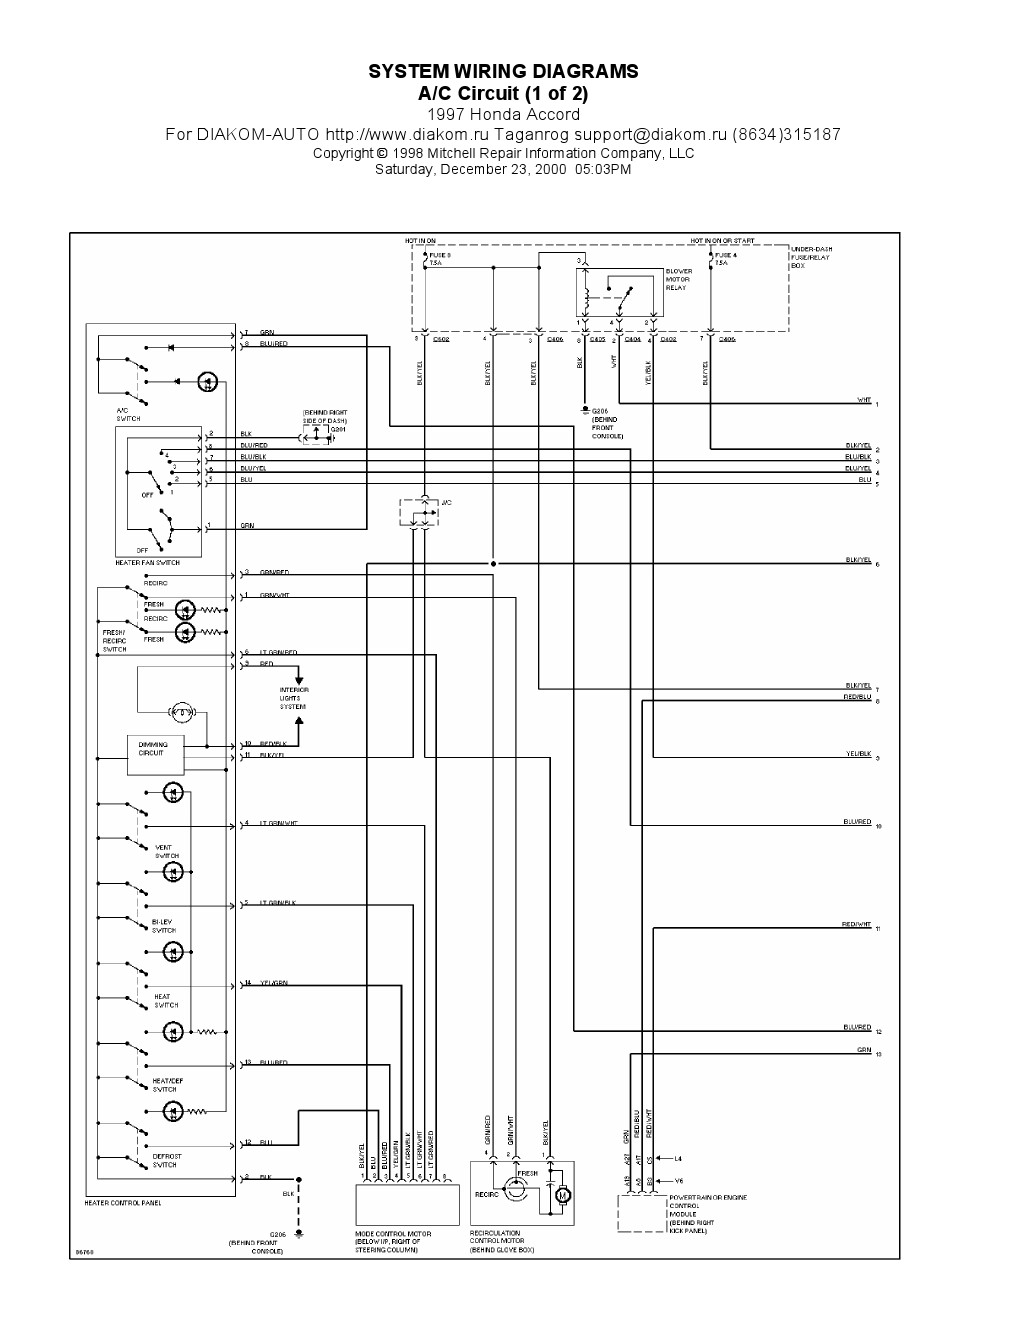 1997 Honda Accord A  C Circuits System Wiring Diagrams